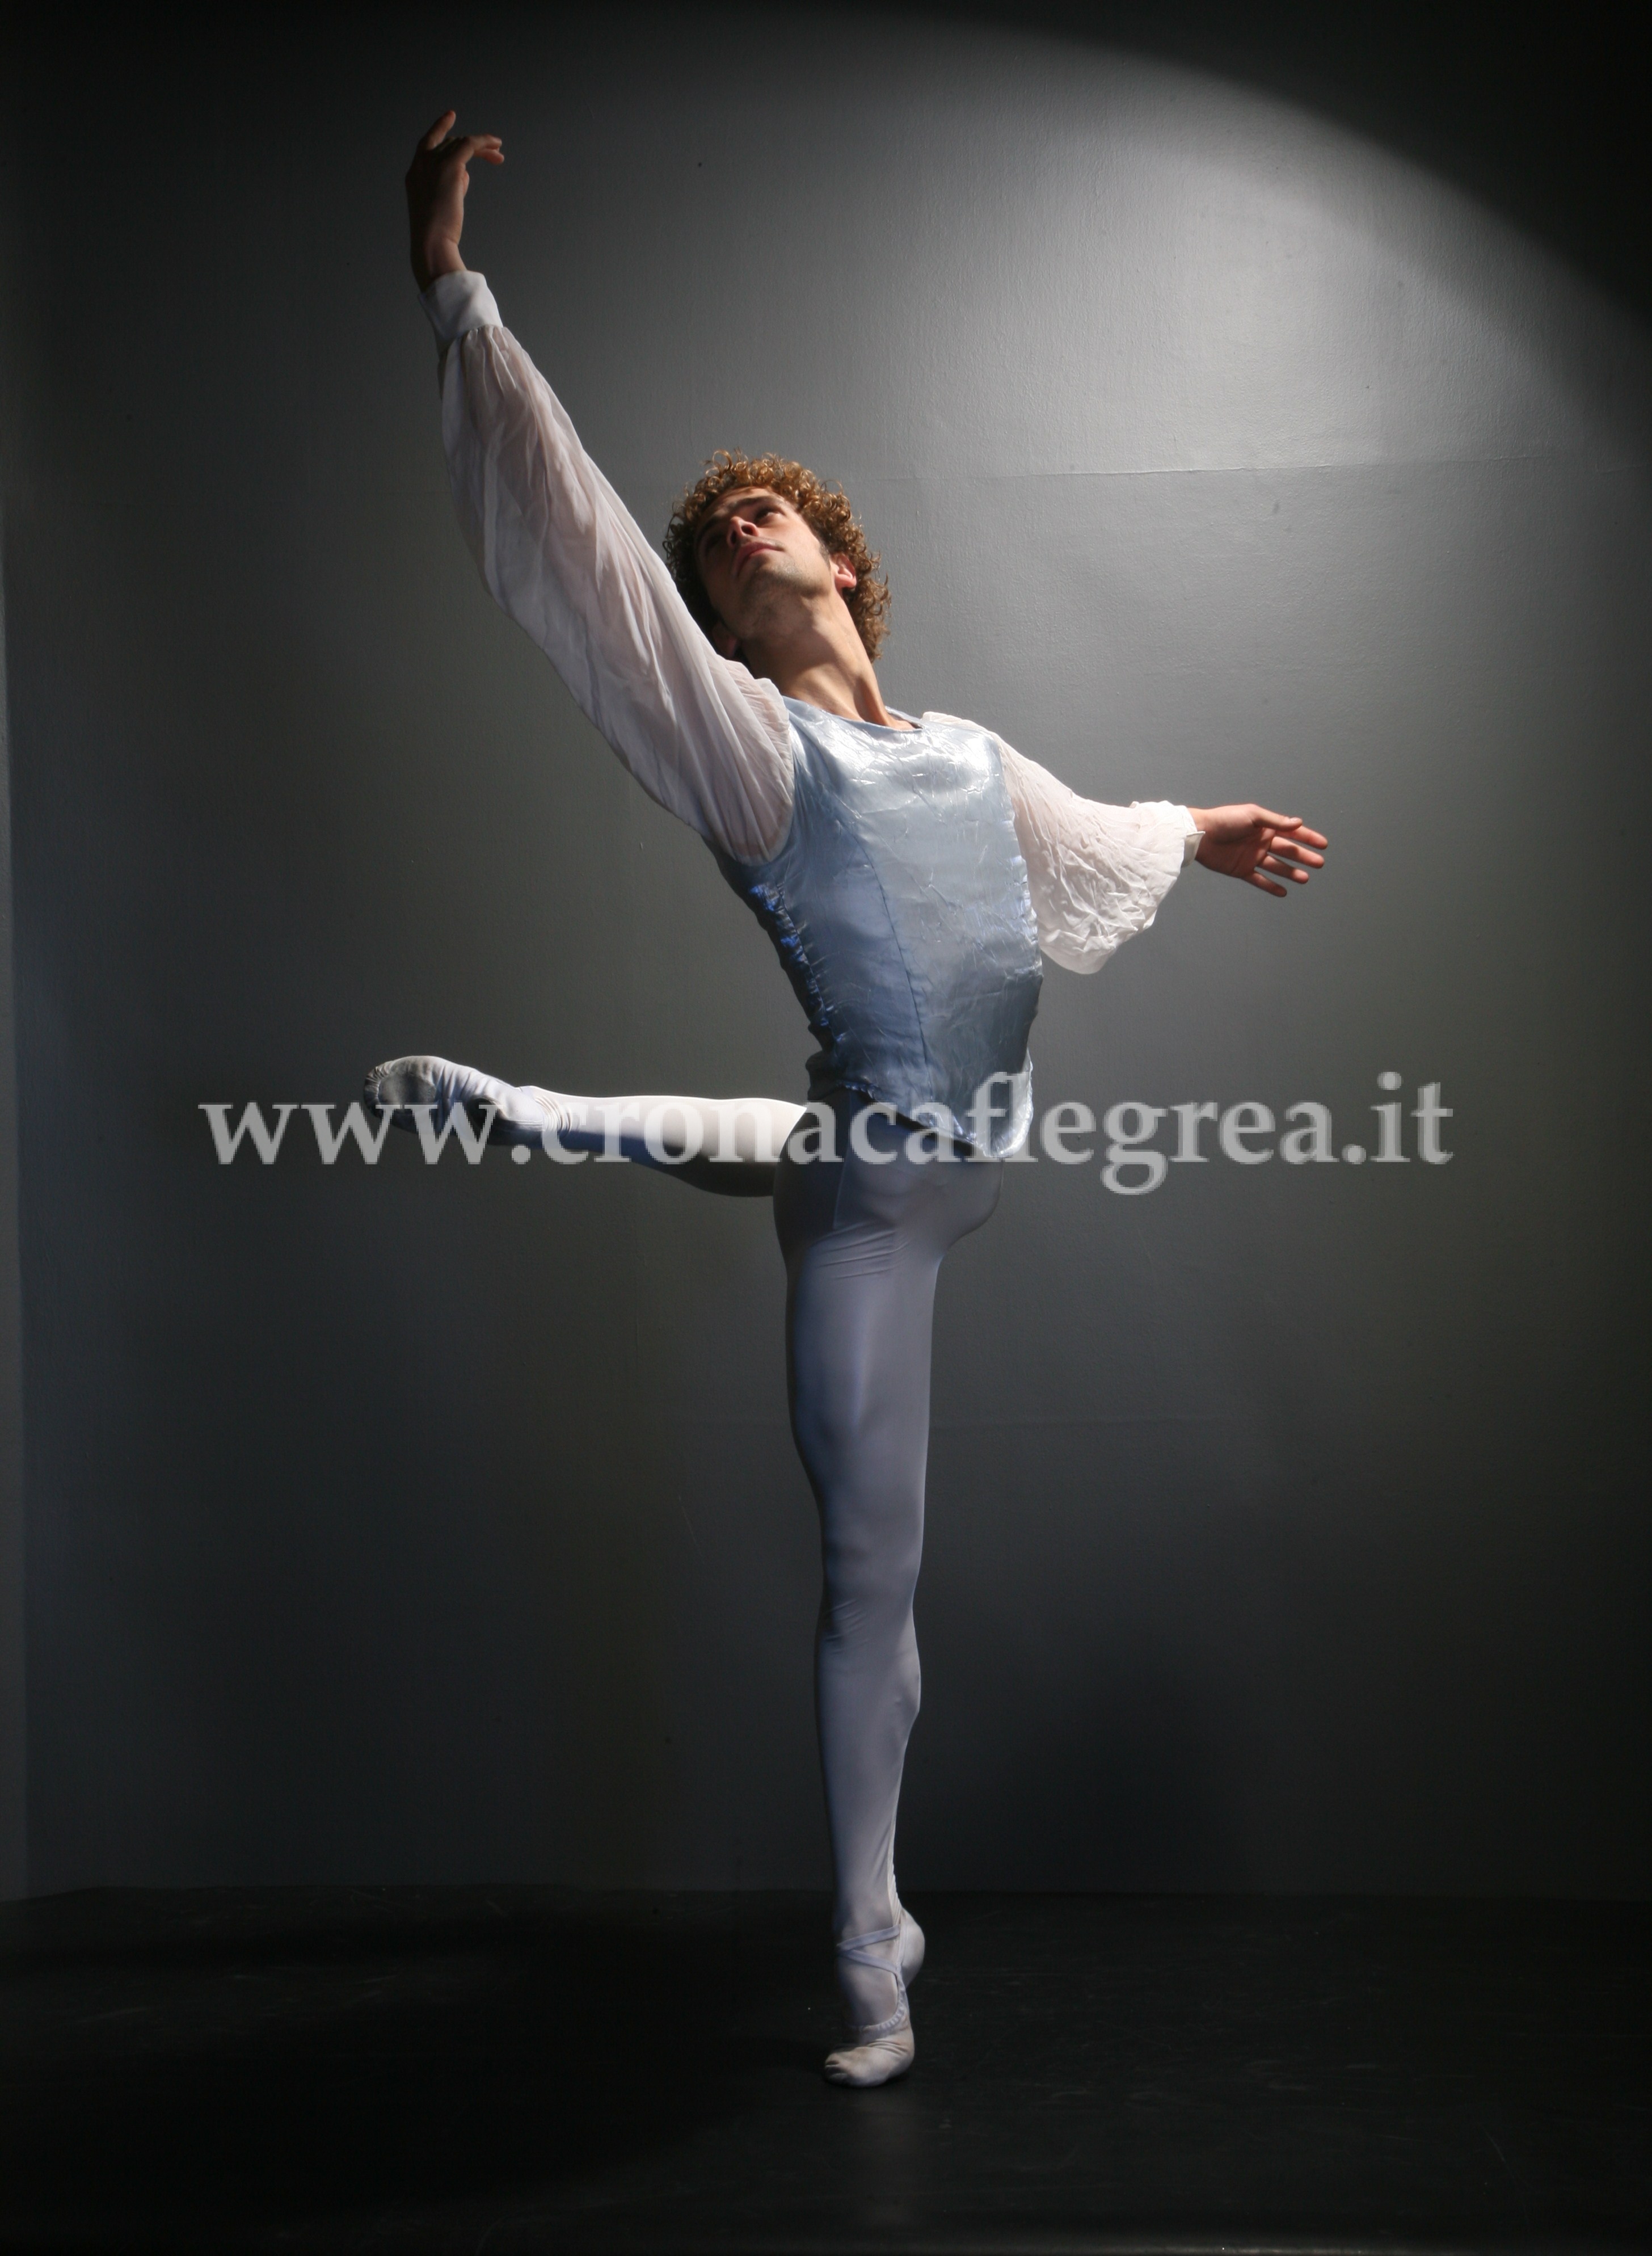 Luca Giaccio, giovane ballerino e talento puteolano nel mondo